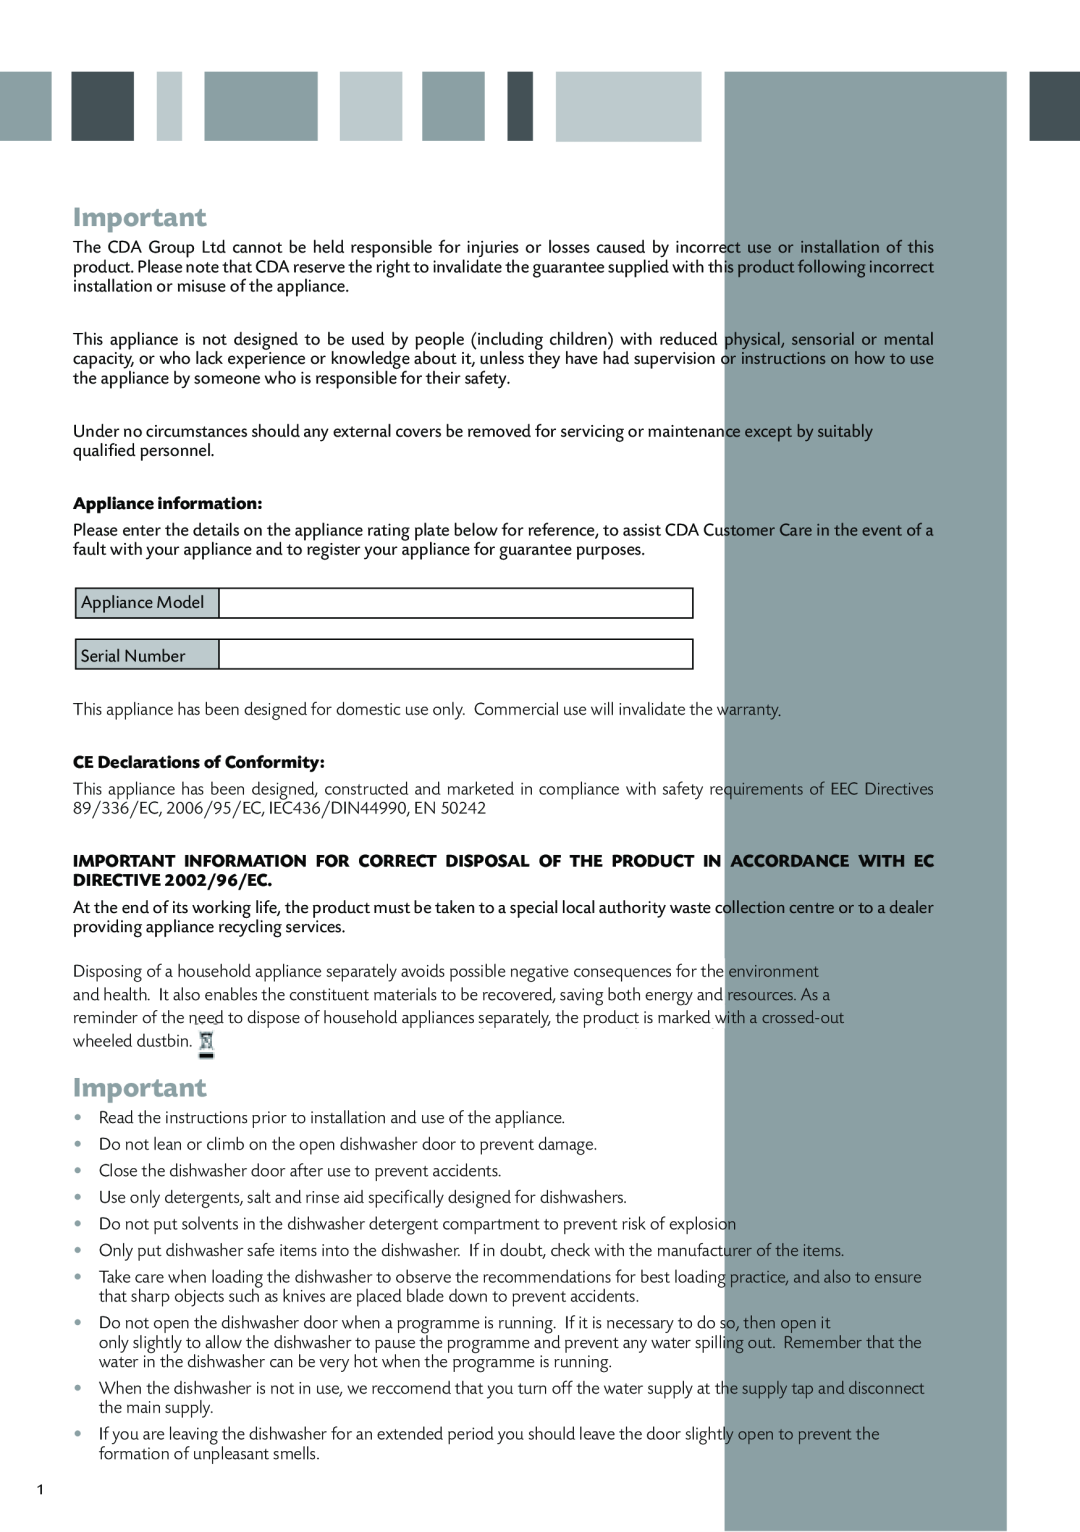 CDA WC370 manual Appliance information, CE Declarations of Conformity 